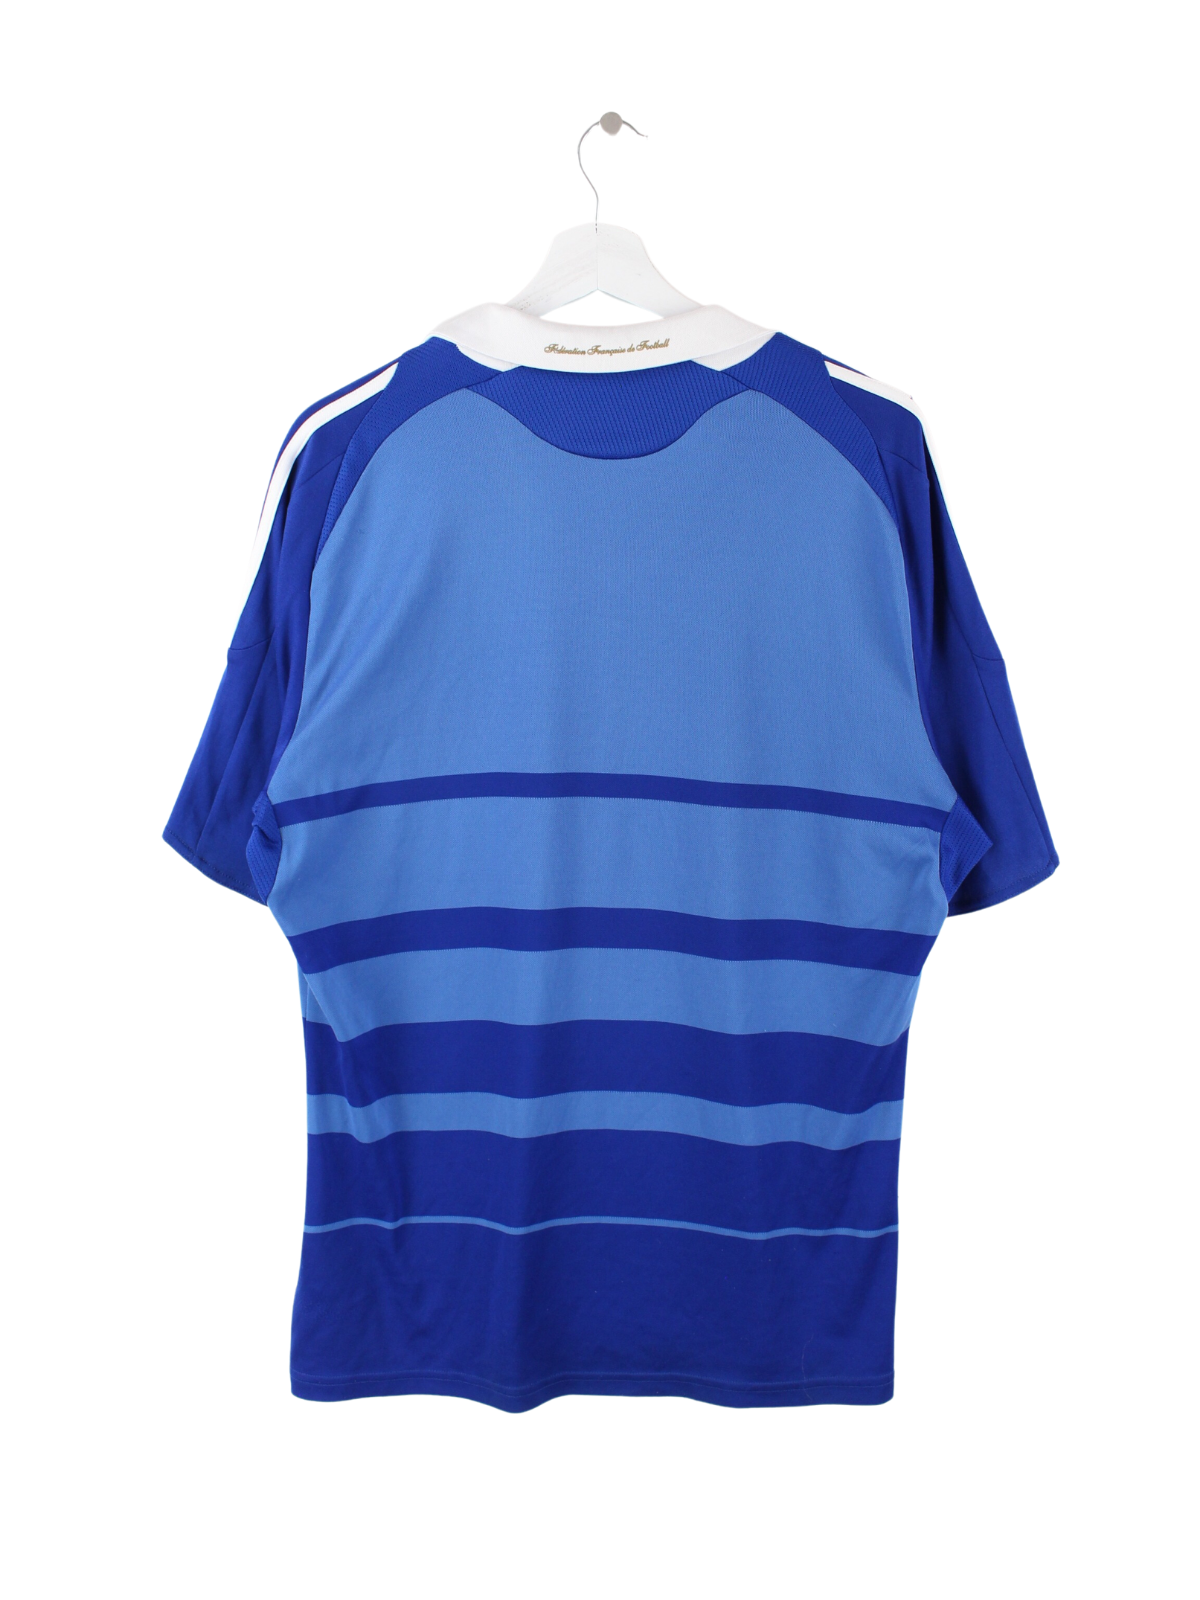 Adidas FFF France Jersey Blue L